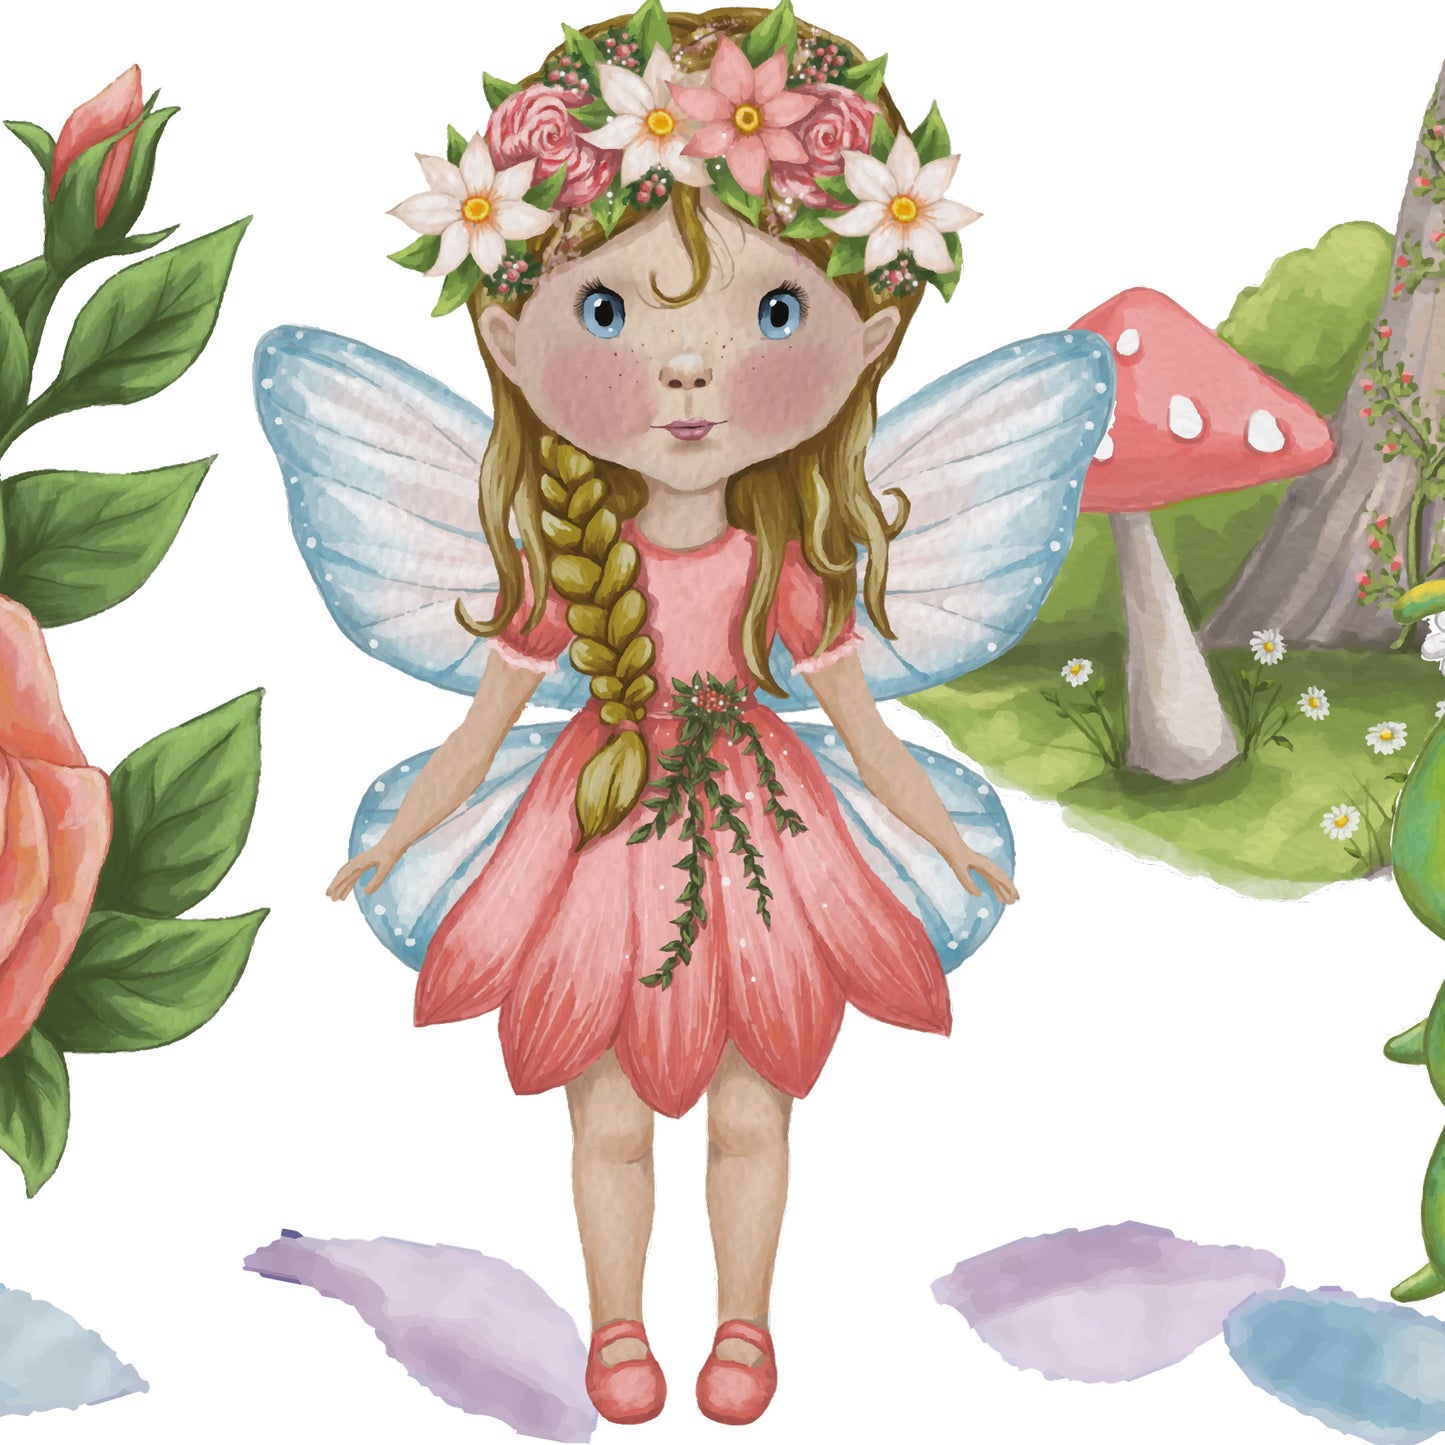 Flower Fairy, Mushroom Home & Dragon Wall Stickers